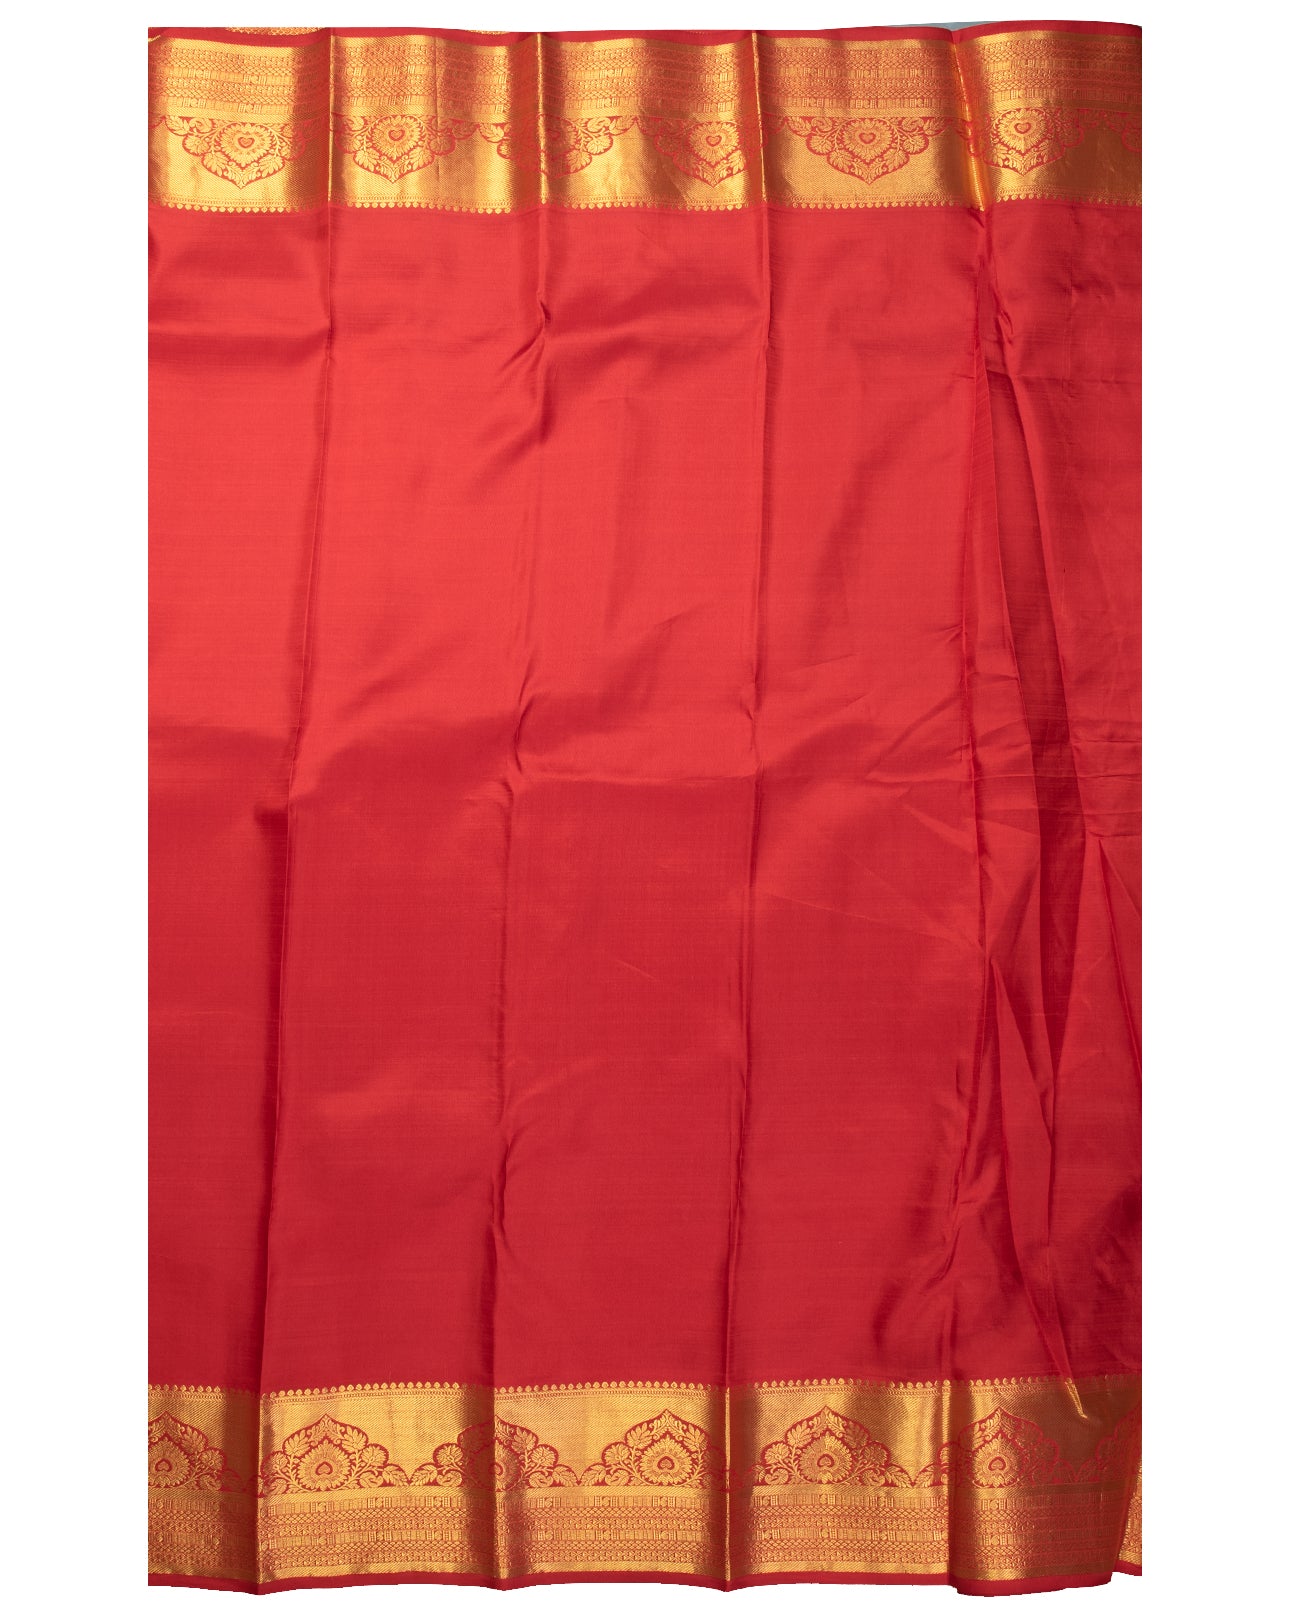 Reddish Maroon wedding saree - swayamvara silks